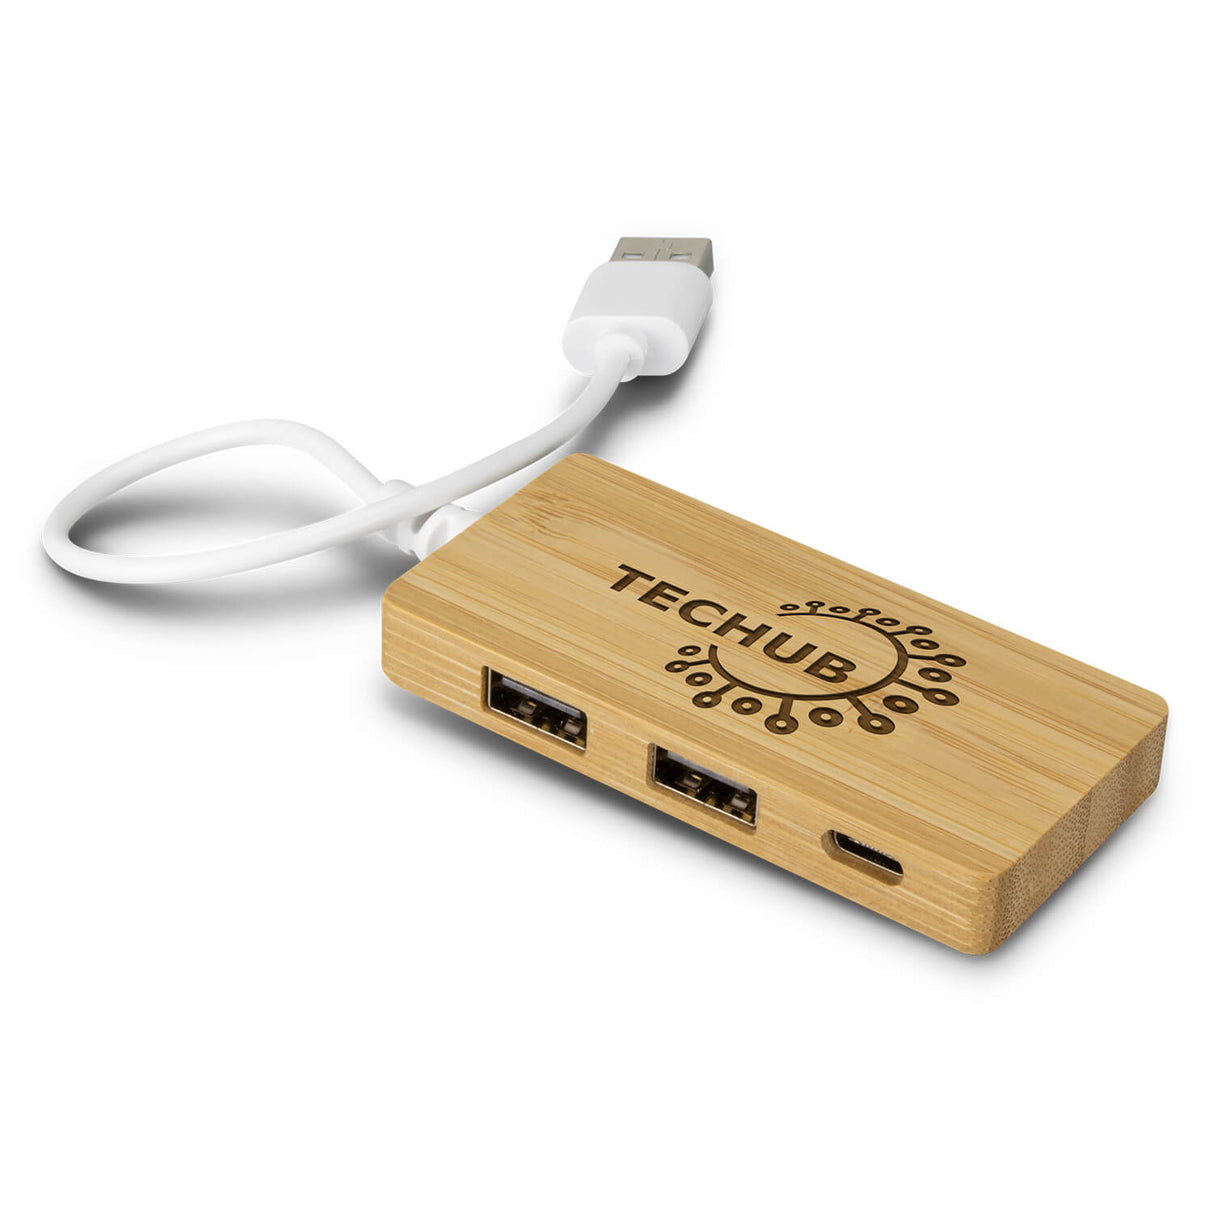 Bamboo USB Hub - Engraved